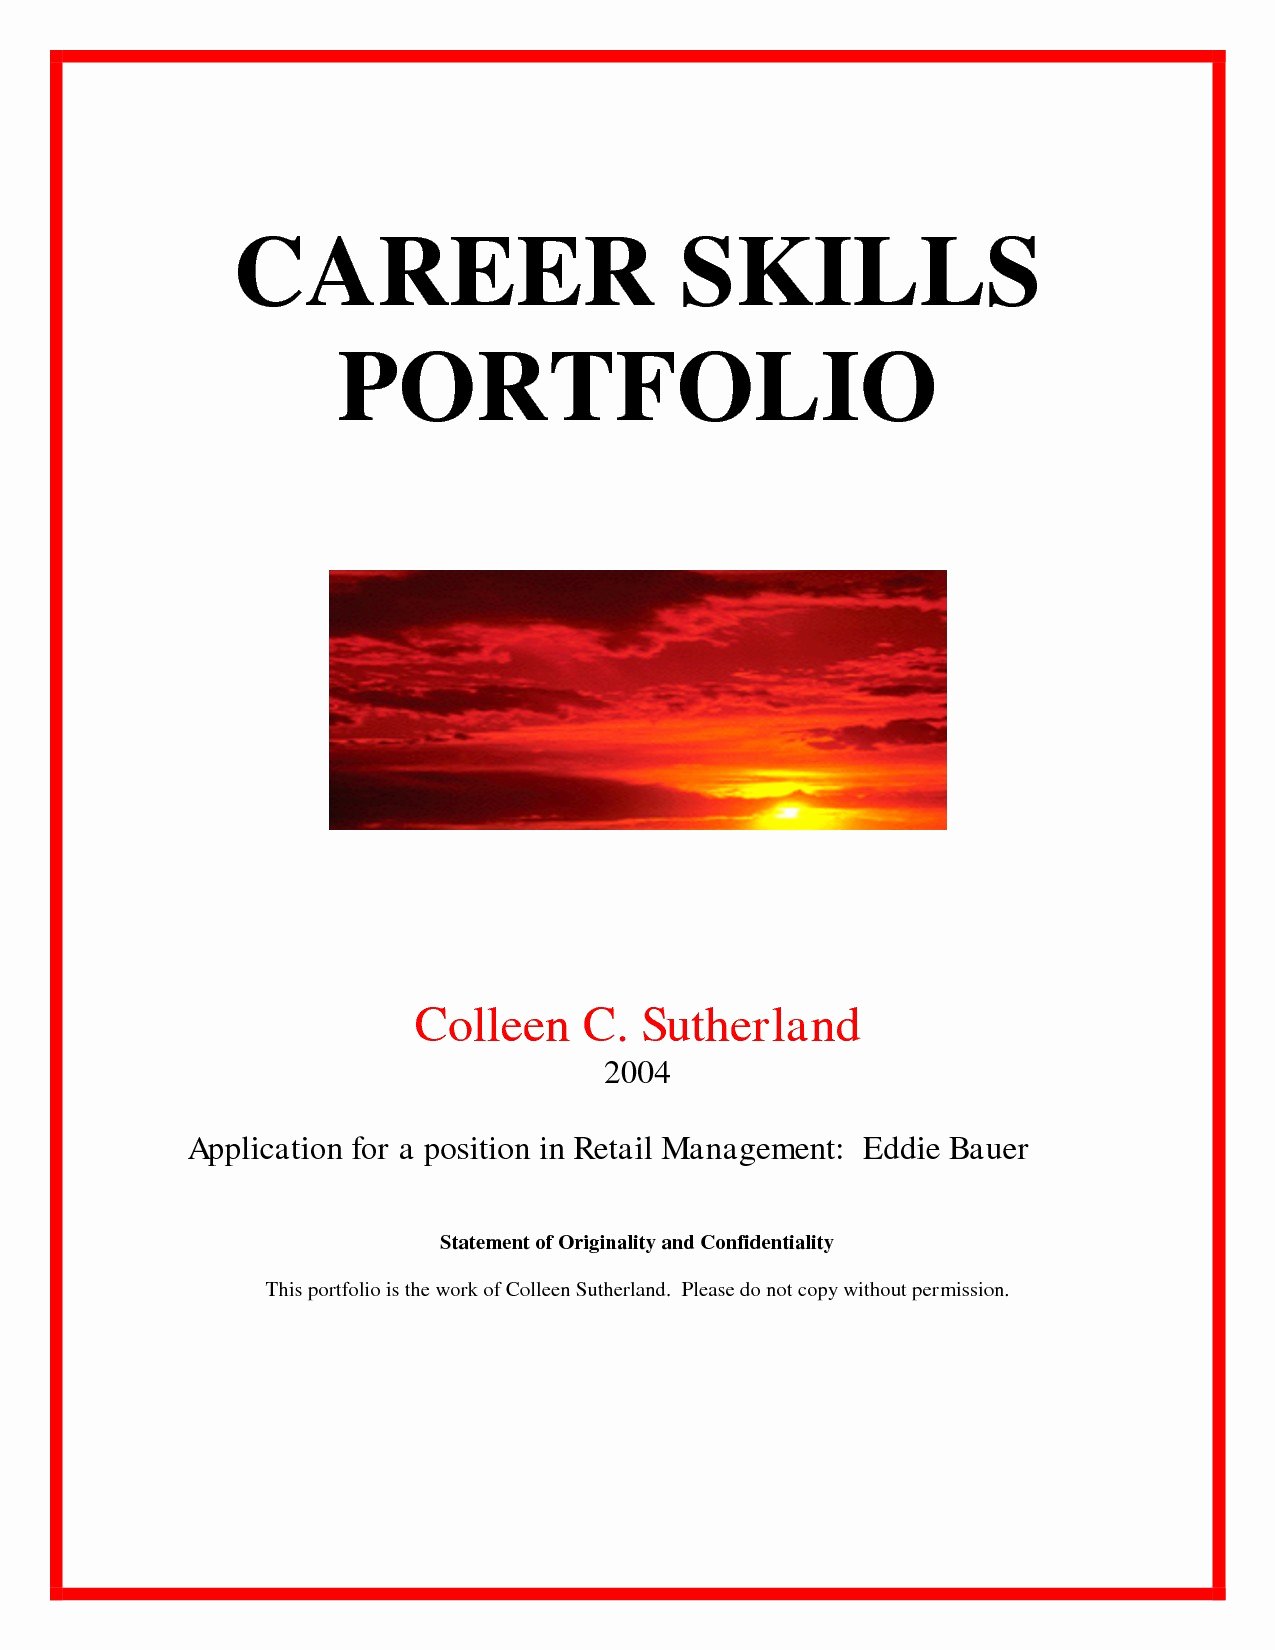 portfolio cover page example career portfolio cover page template